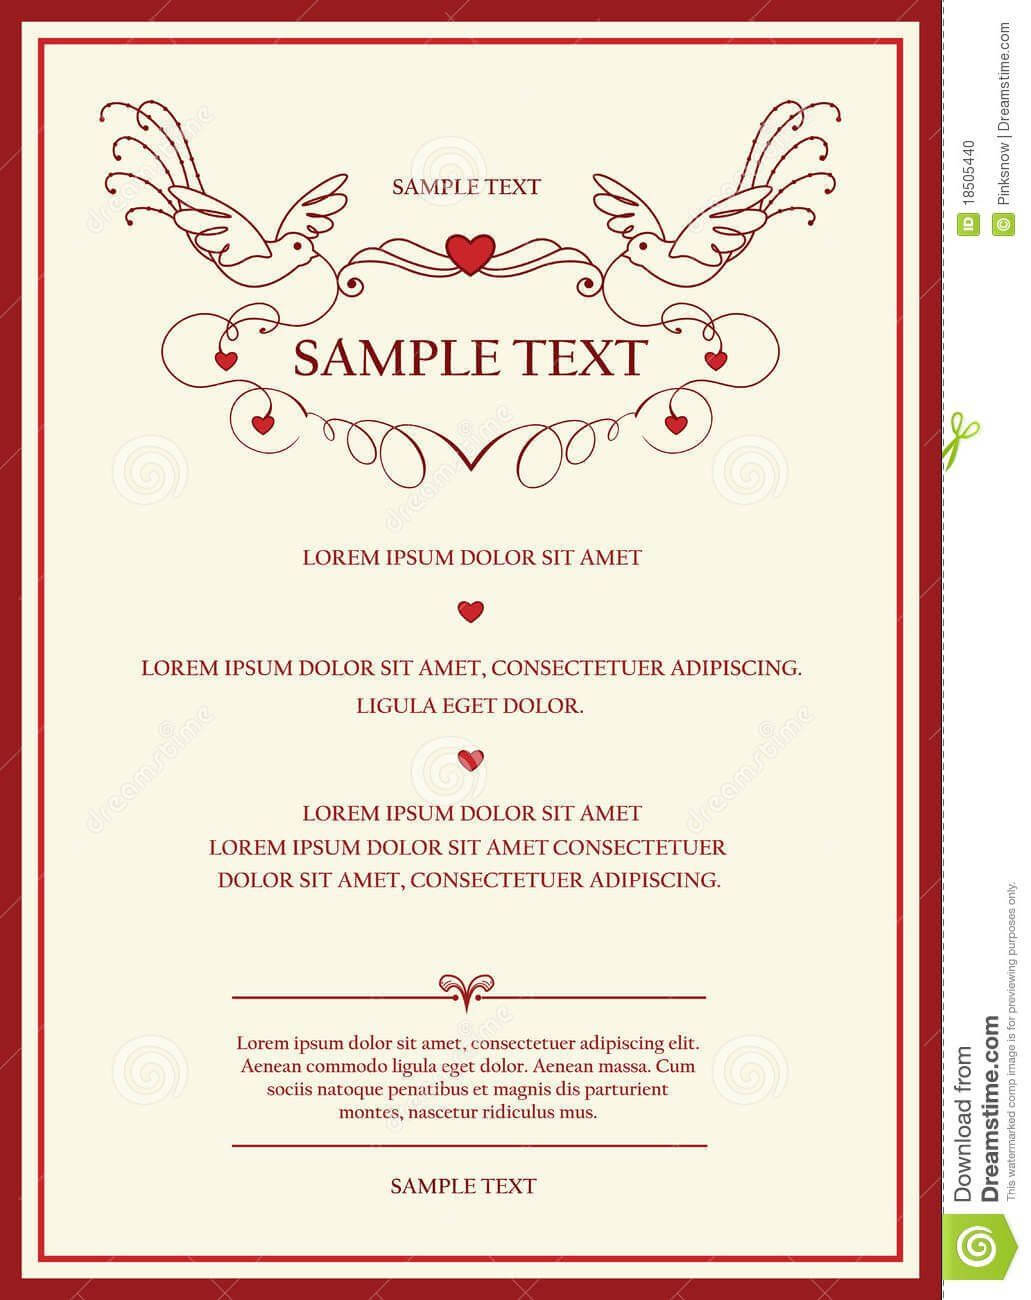 Wedding Invitation Cards Templates | Wedding Invitations In Throughout Sample Wedding Invitation Cards Templates